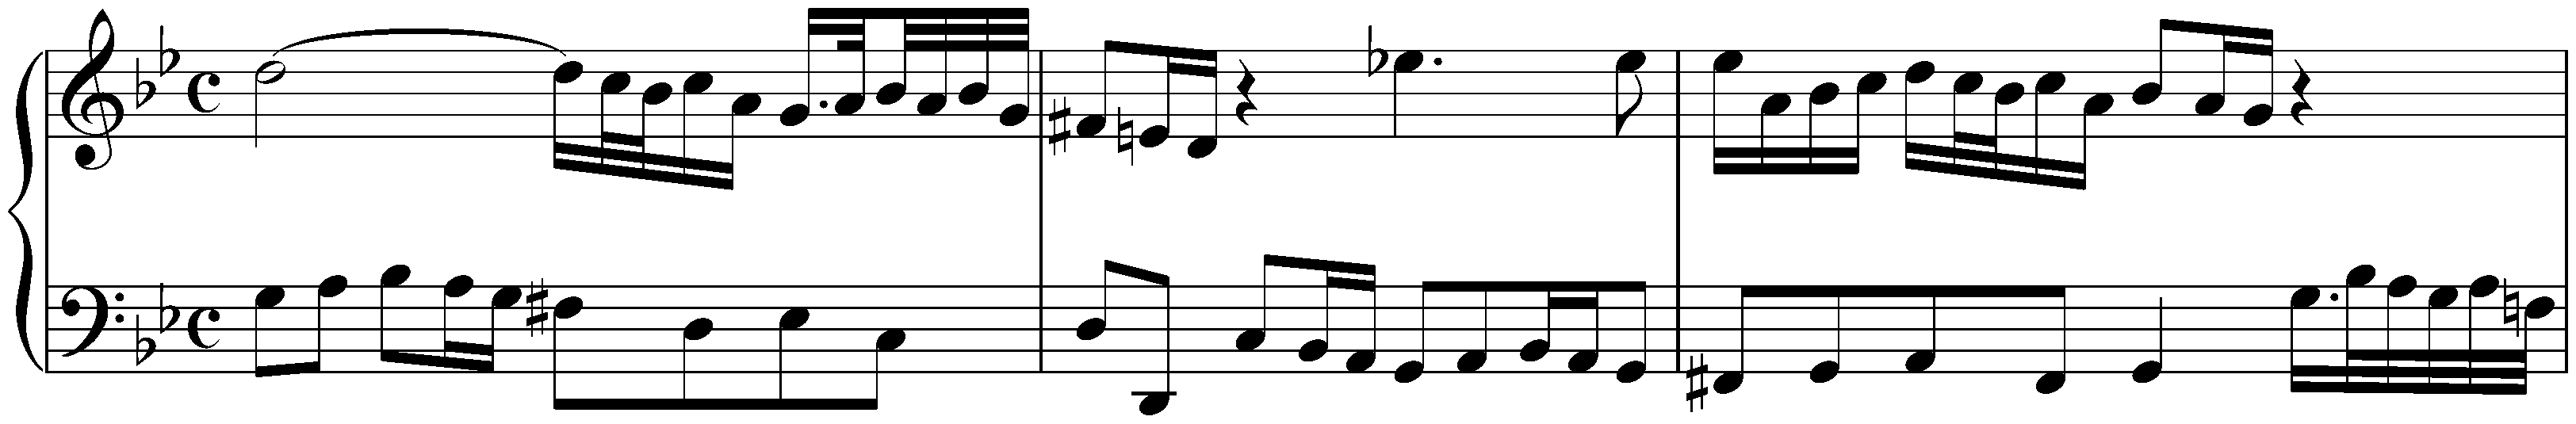 Overture in G minor, BWV 822; 2. Aria